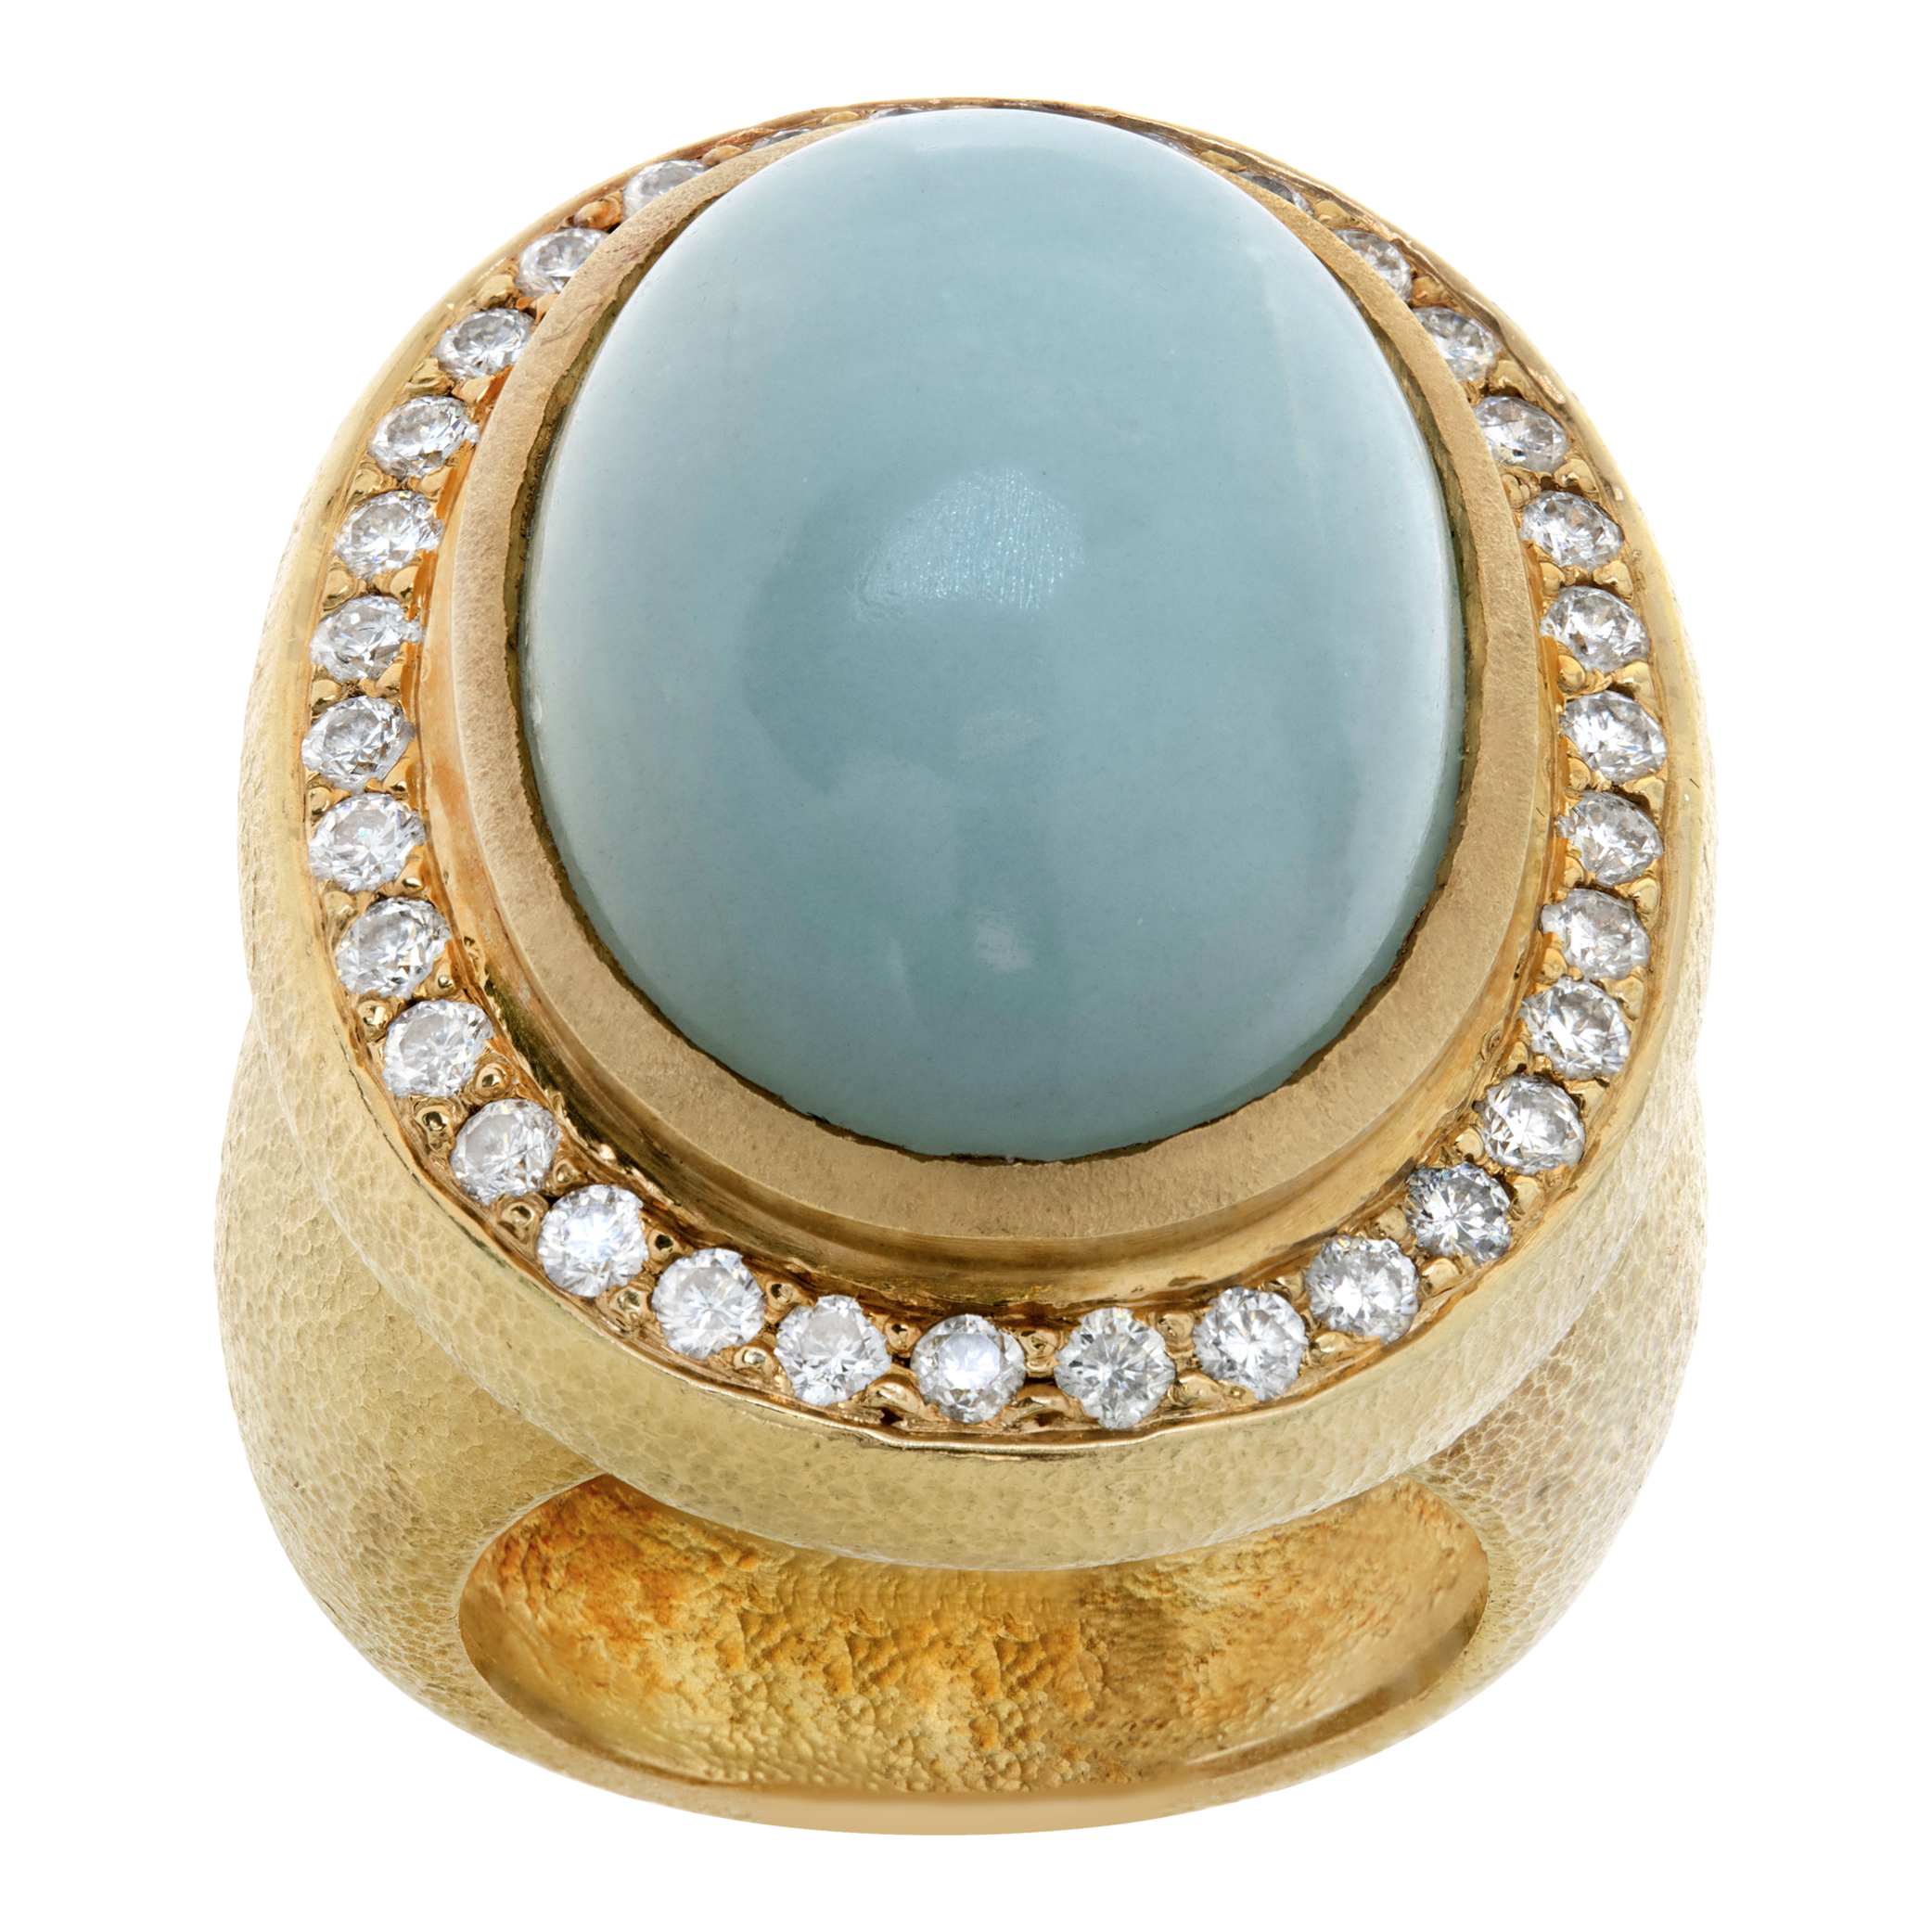 Seafoam chalcedony ring with 1 carat in diamonds (Stones) image 1